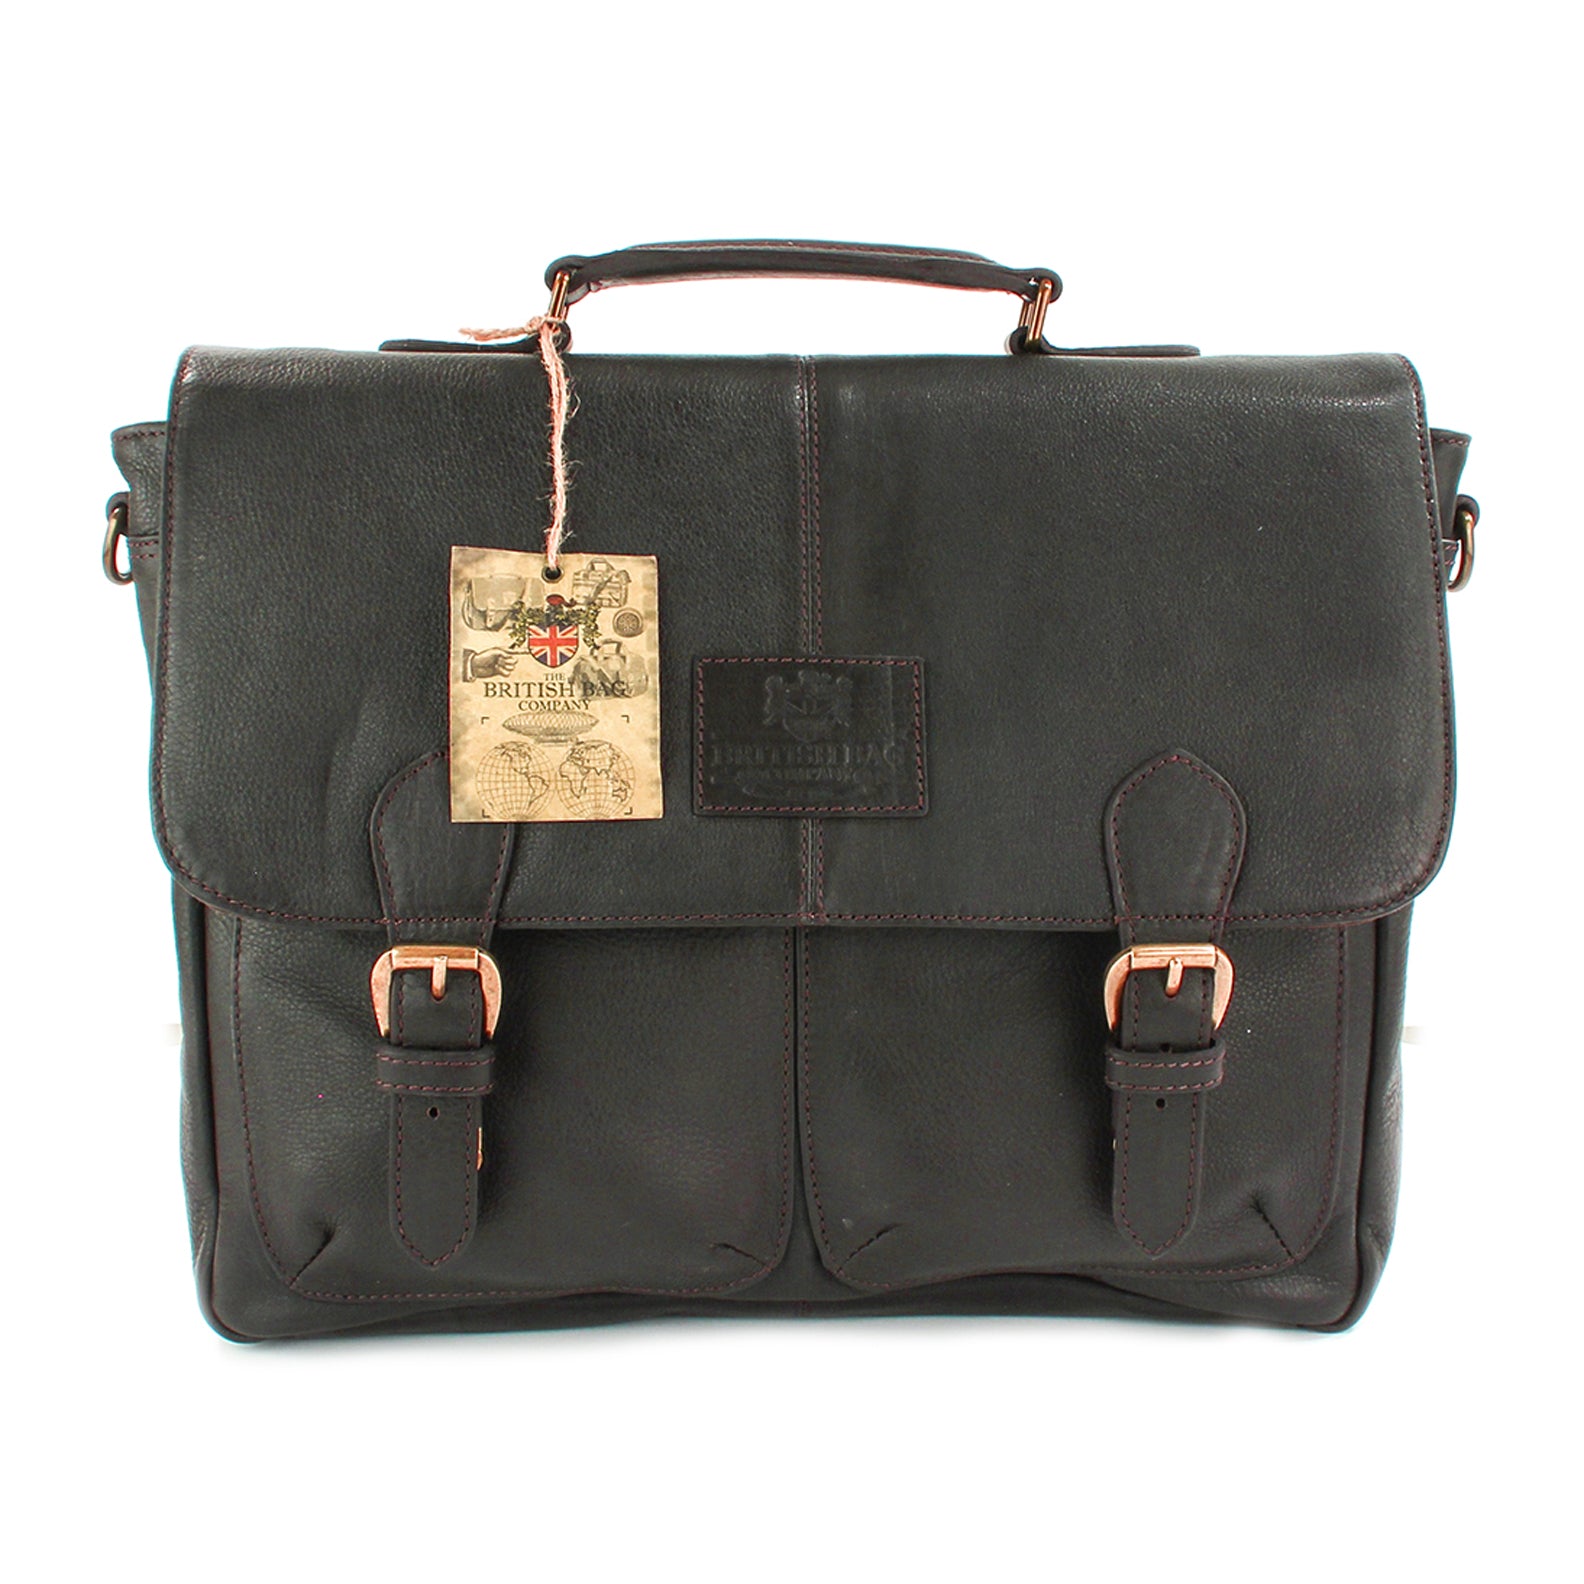 British Bag Co. Brown Pebble Grain Leather Briefcase